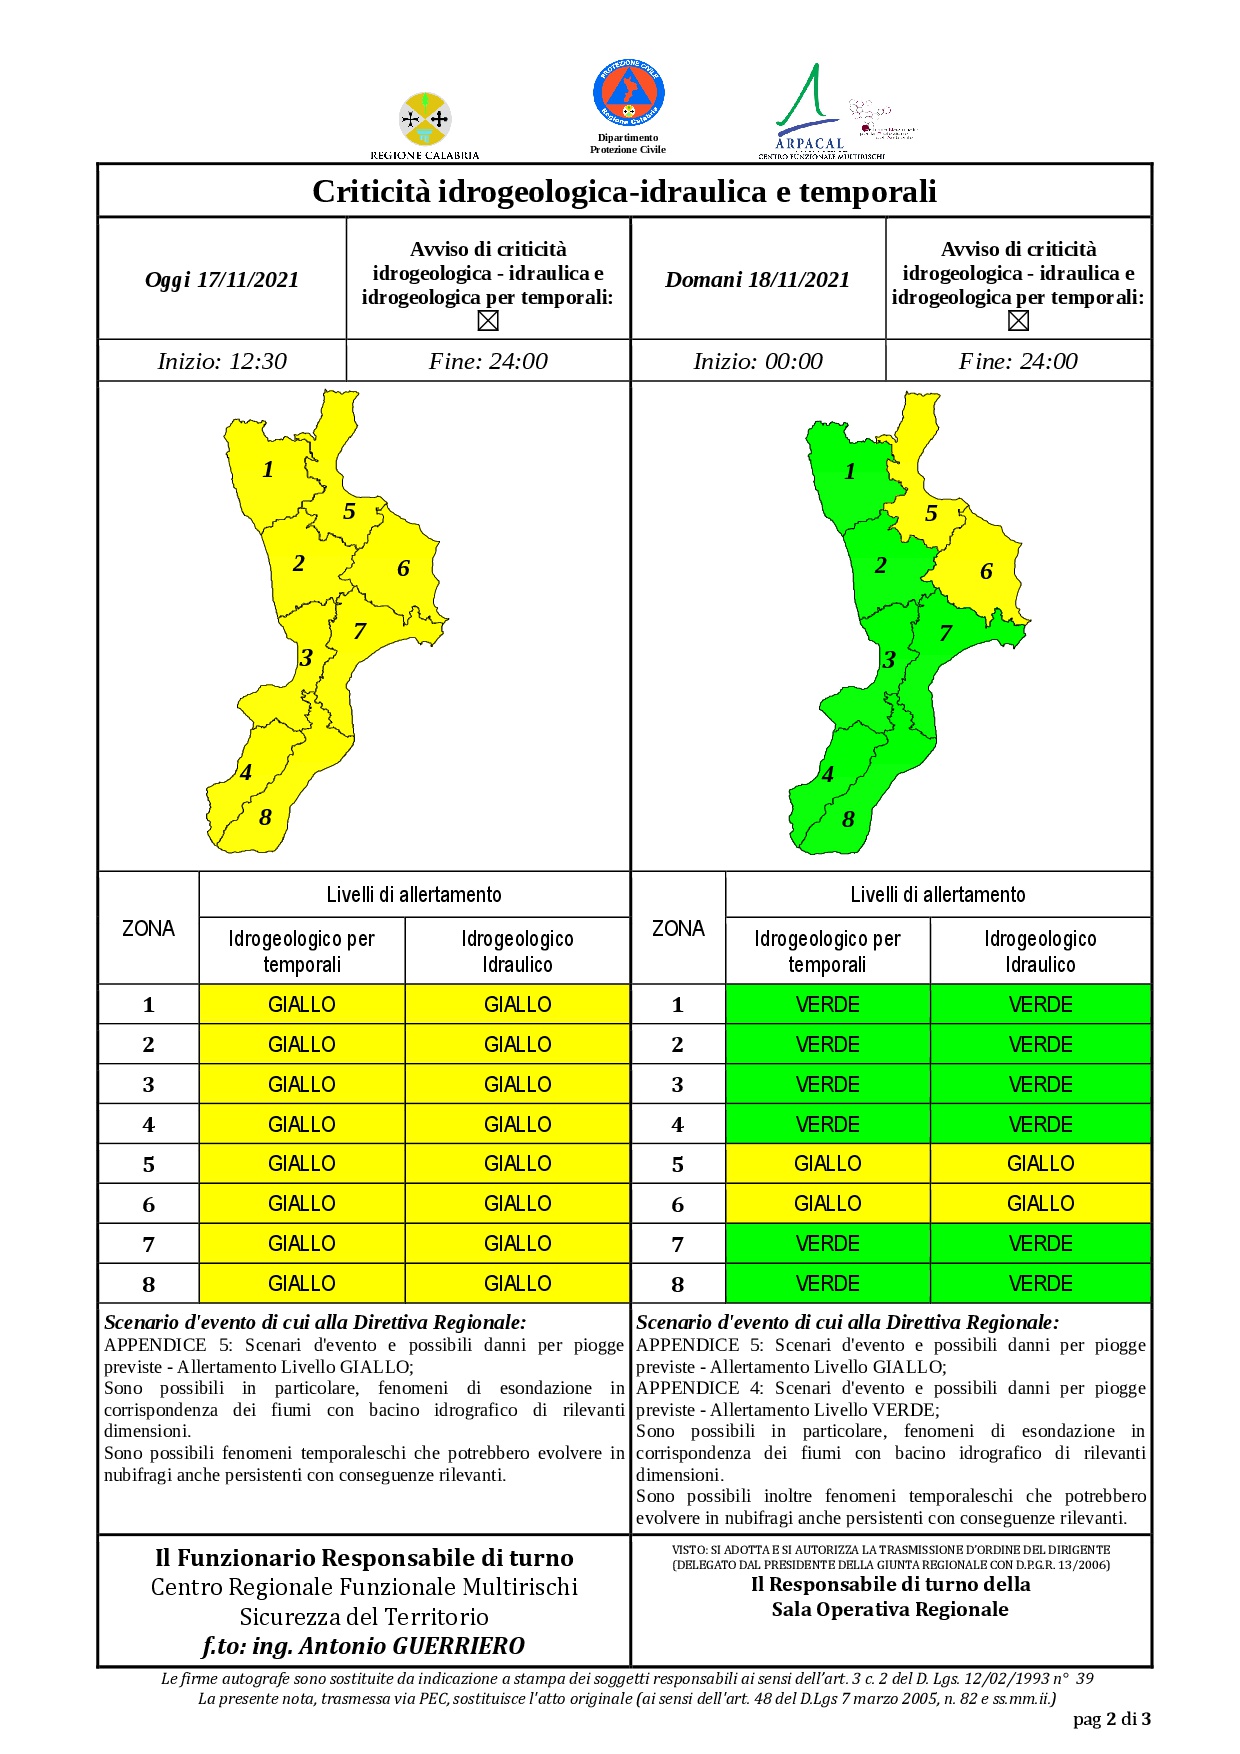 Criticità idrogeologica-idraulica e temporali in Calabria 17-11-2021